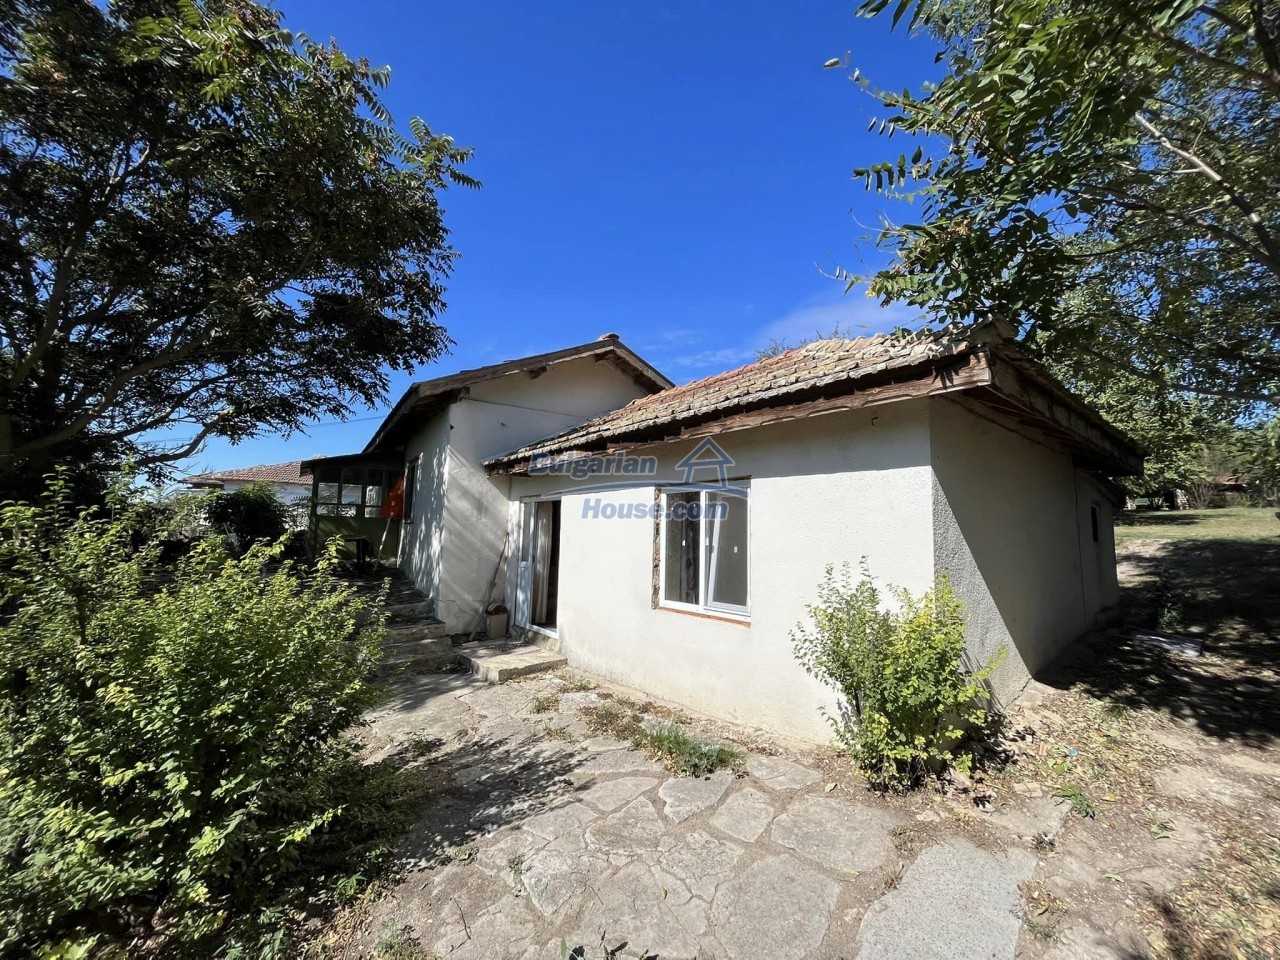 Houses / Villas for sale near Dobrich - 13760